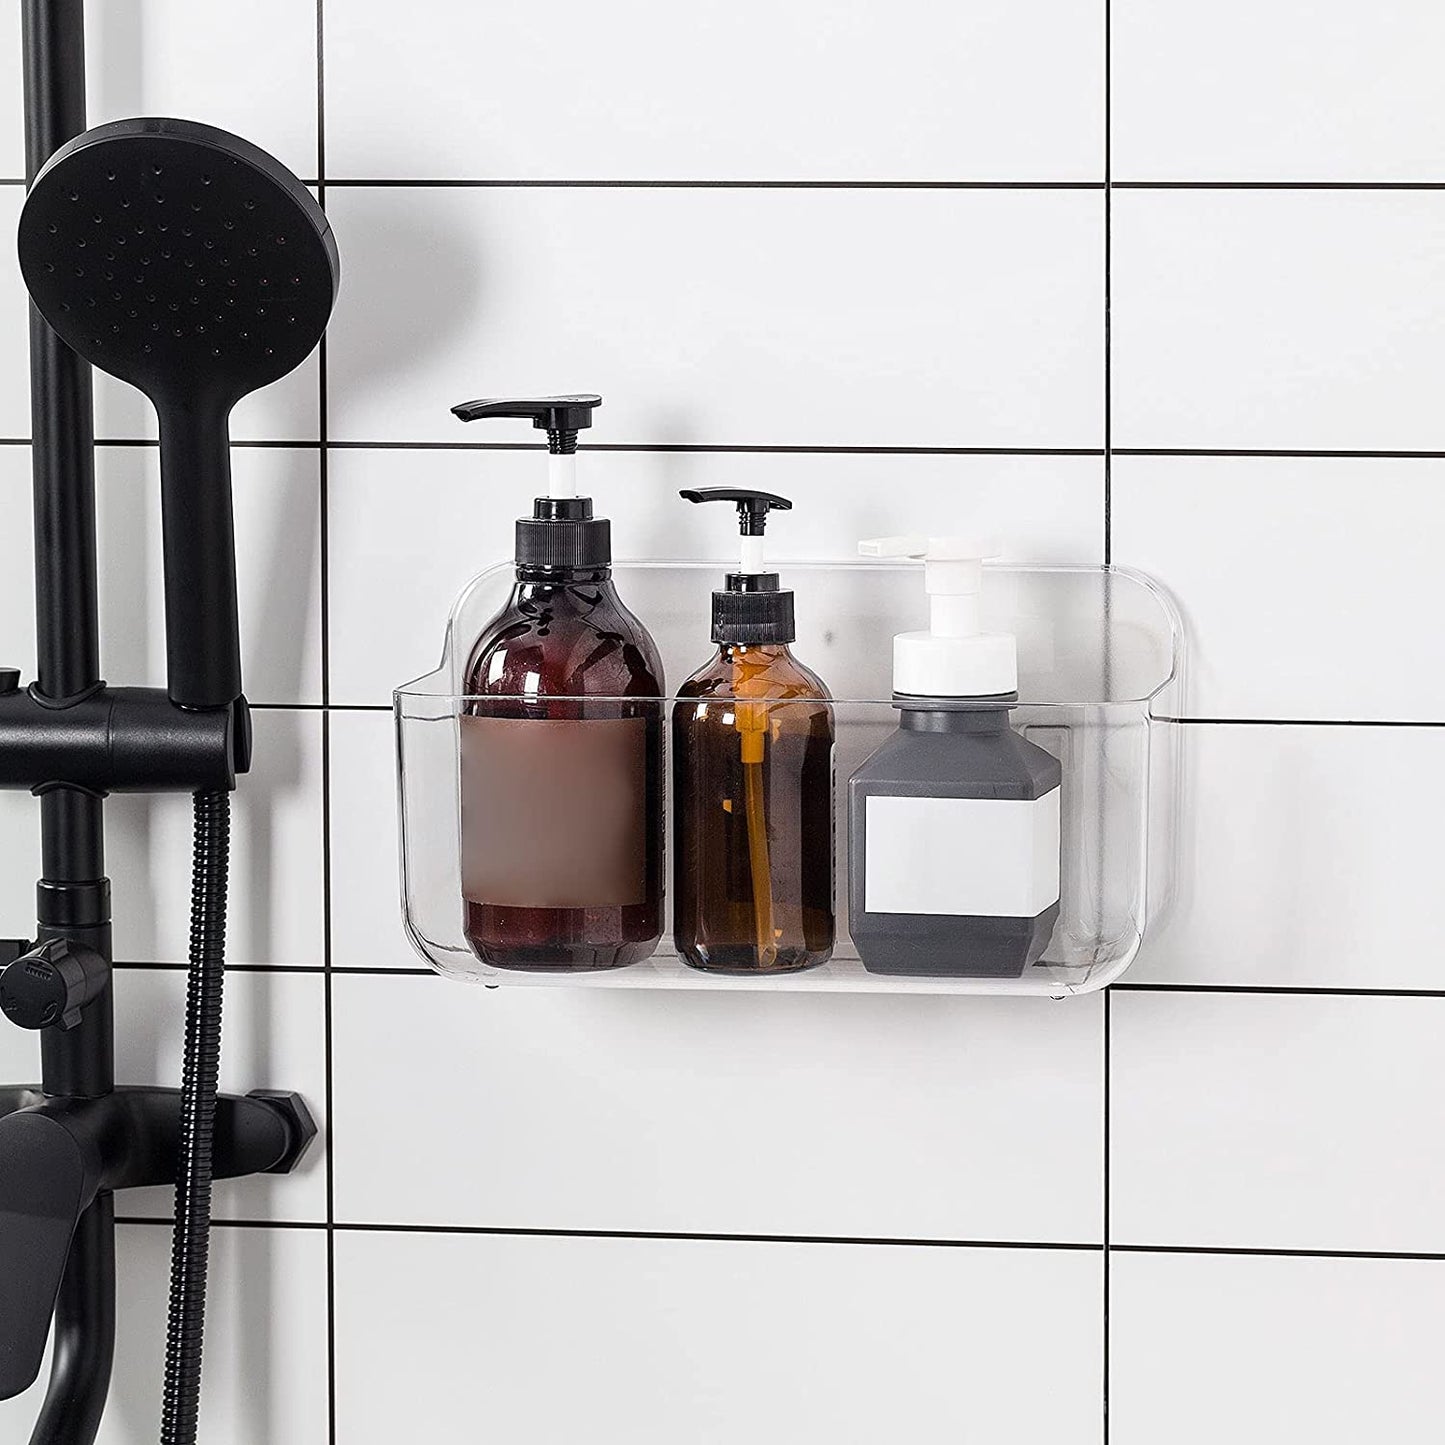 Shower Caddy, Shower Storage, Bathroom Storage, Wall Mounted No Drilling Adhesive Storage for Bathroom, Kitchen, Clear Plastic